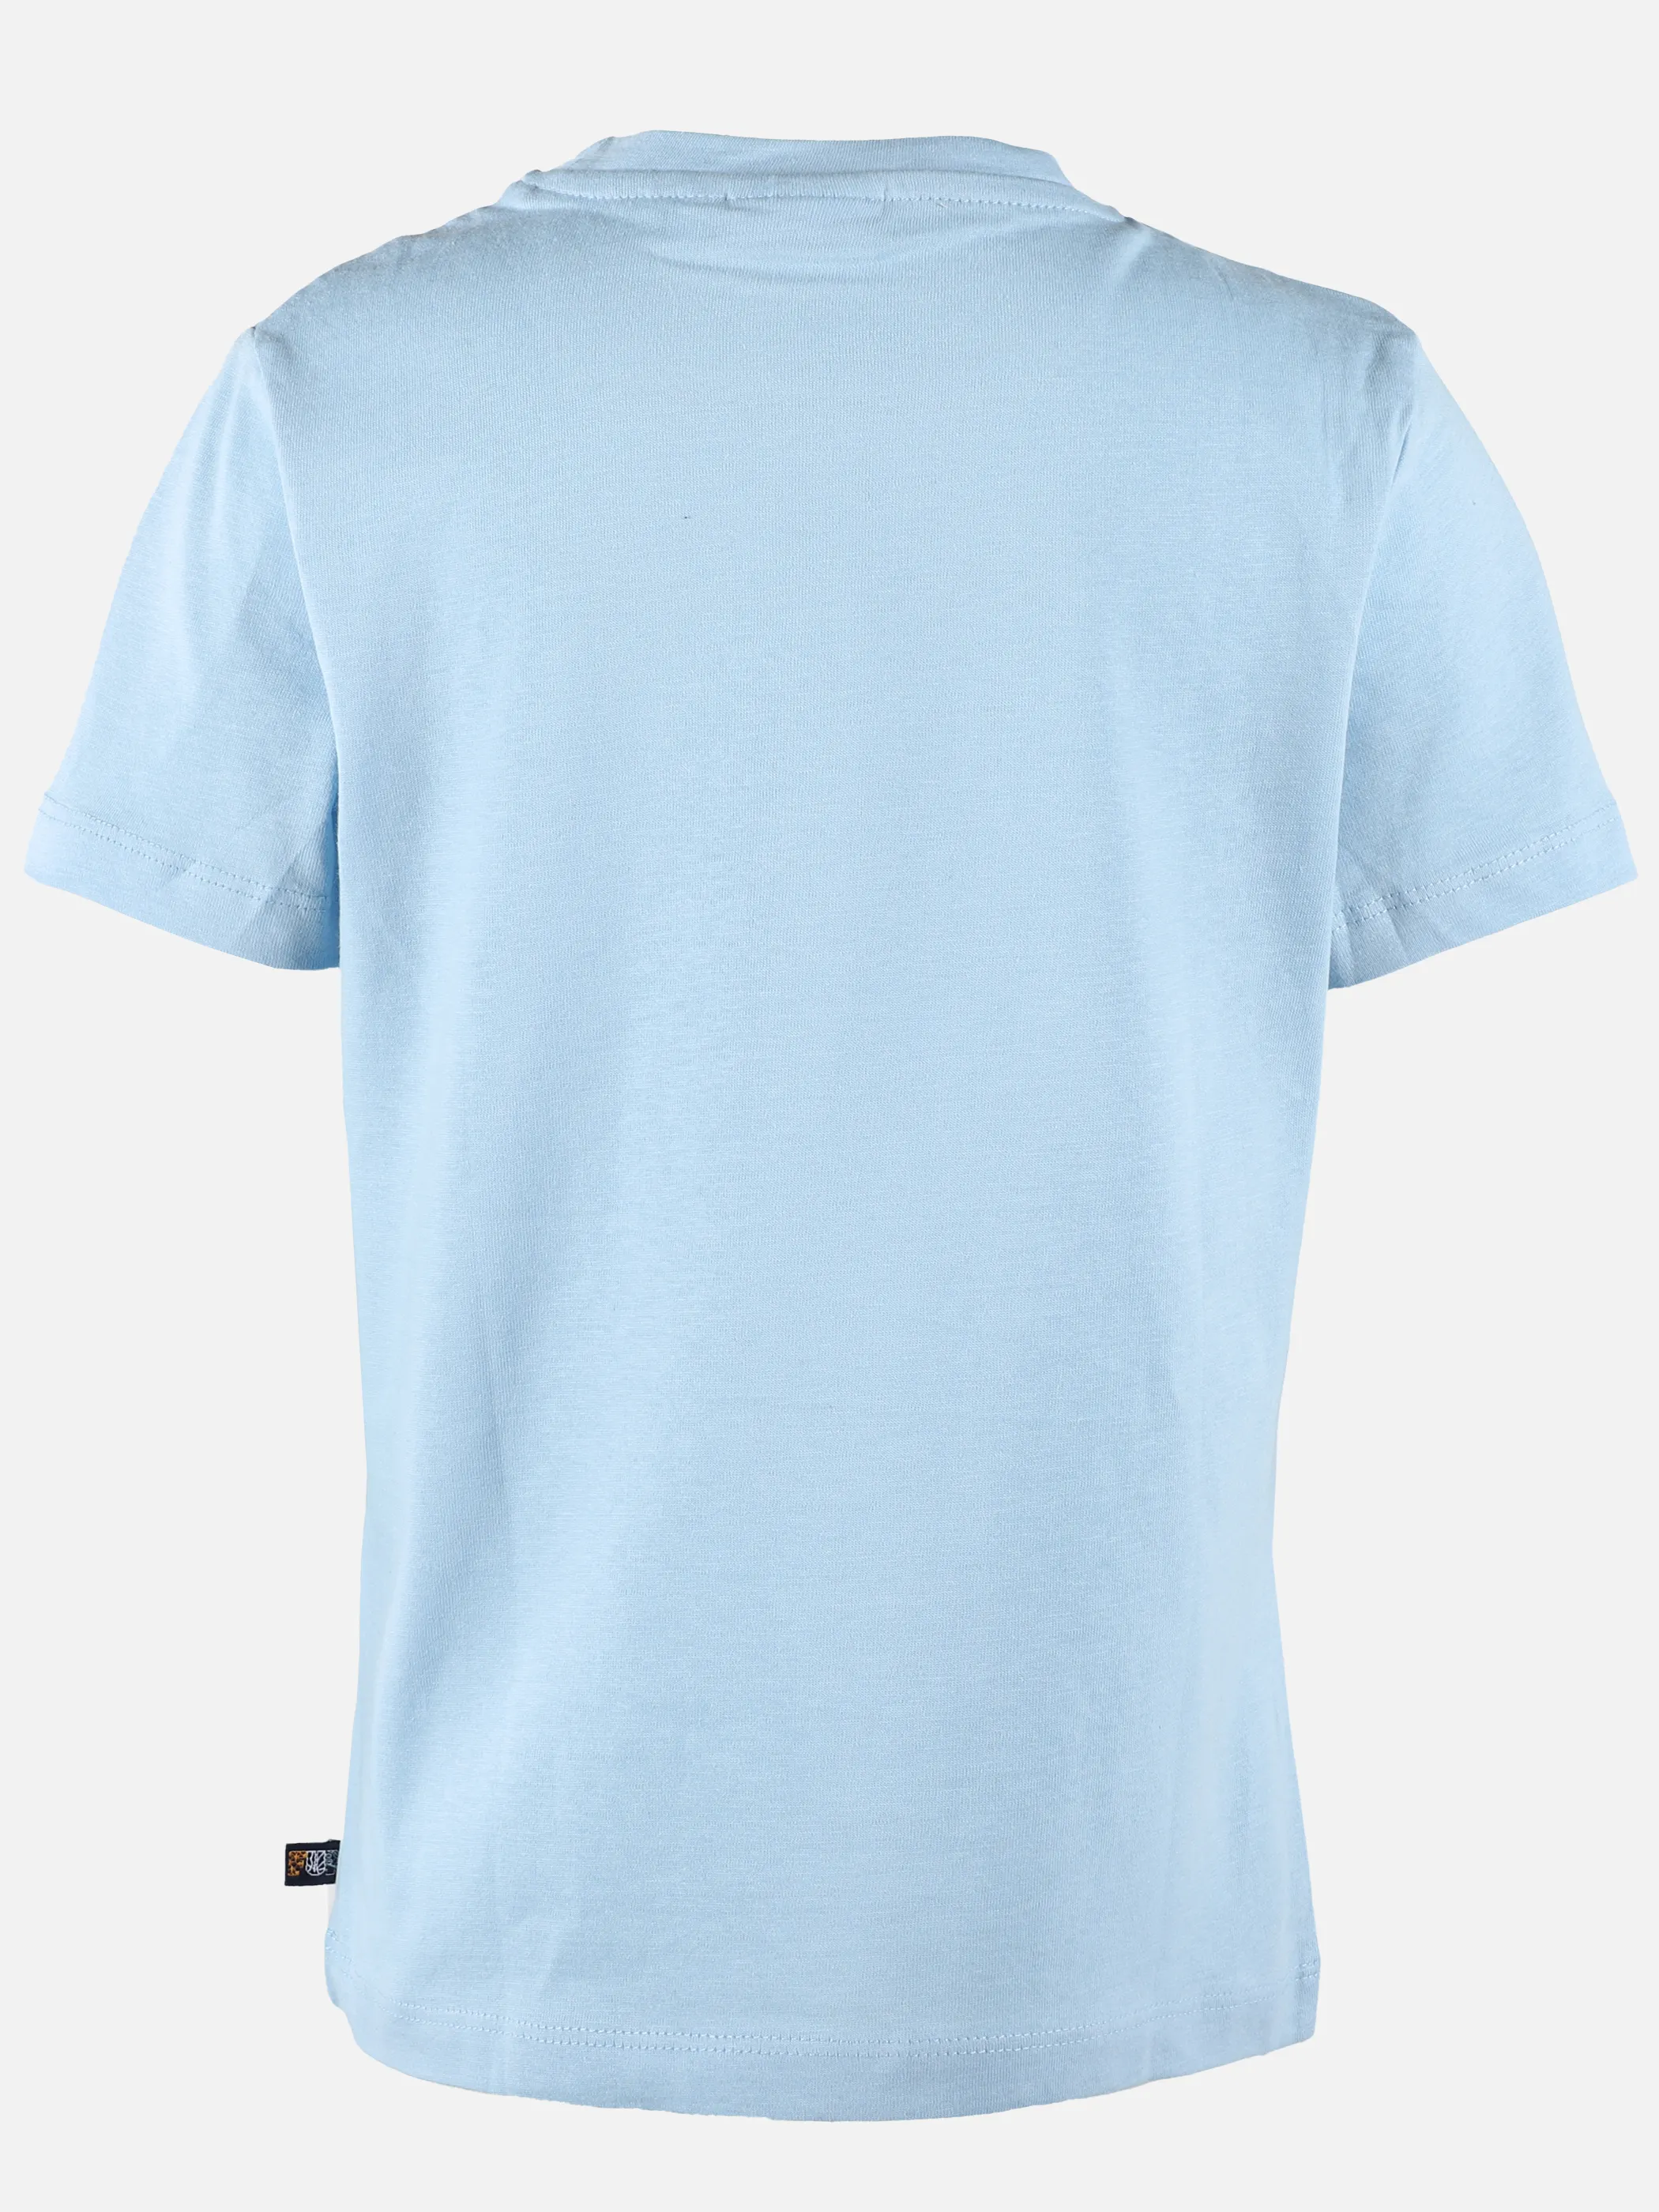 Stop + Go KJ T-Shirt mit Fußballdruck in hellblau Blau 892771 HELLBLAU 2